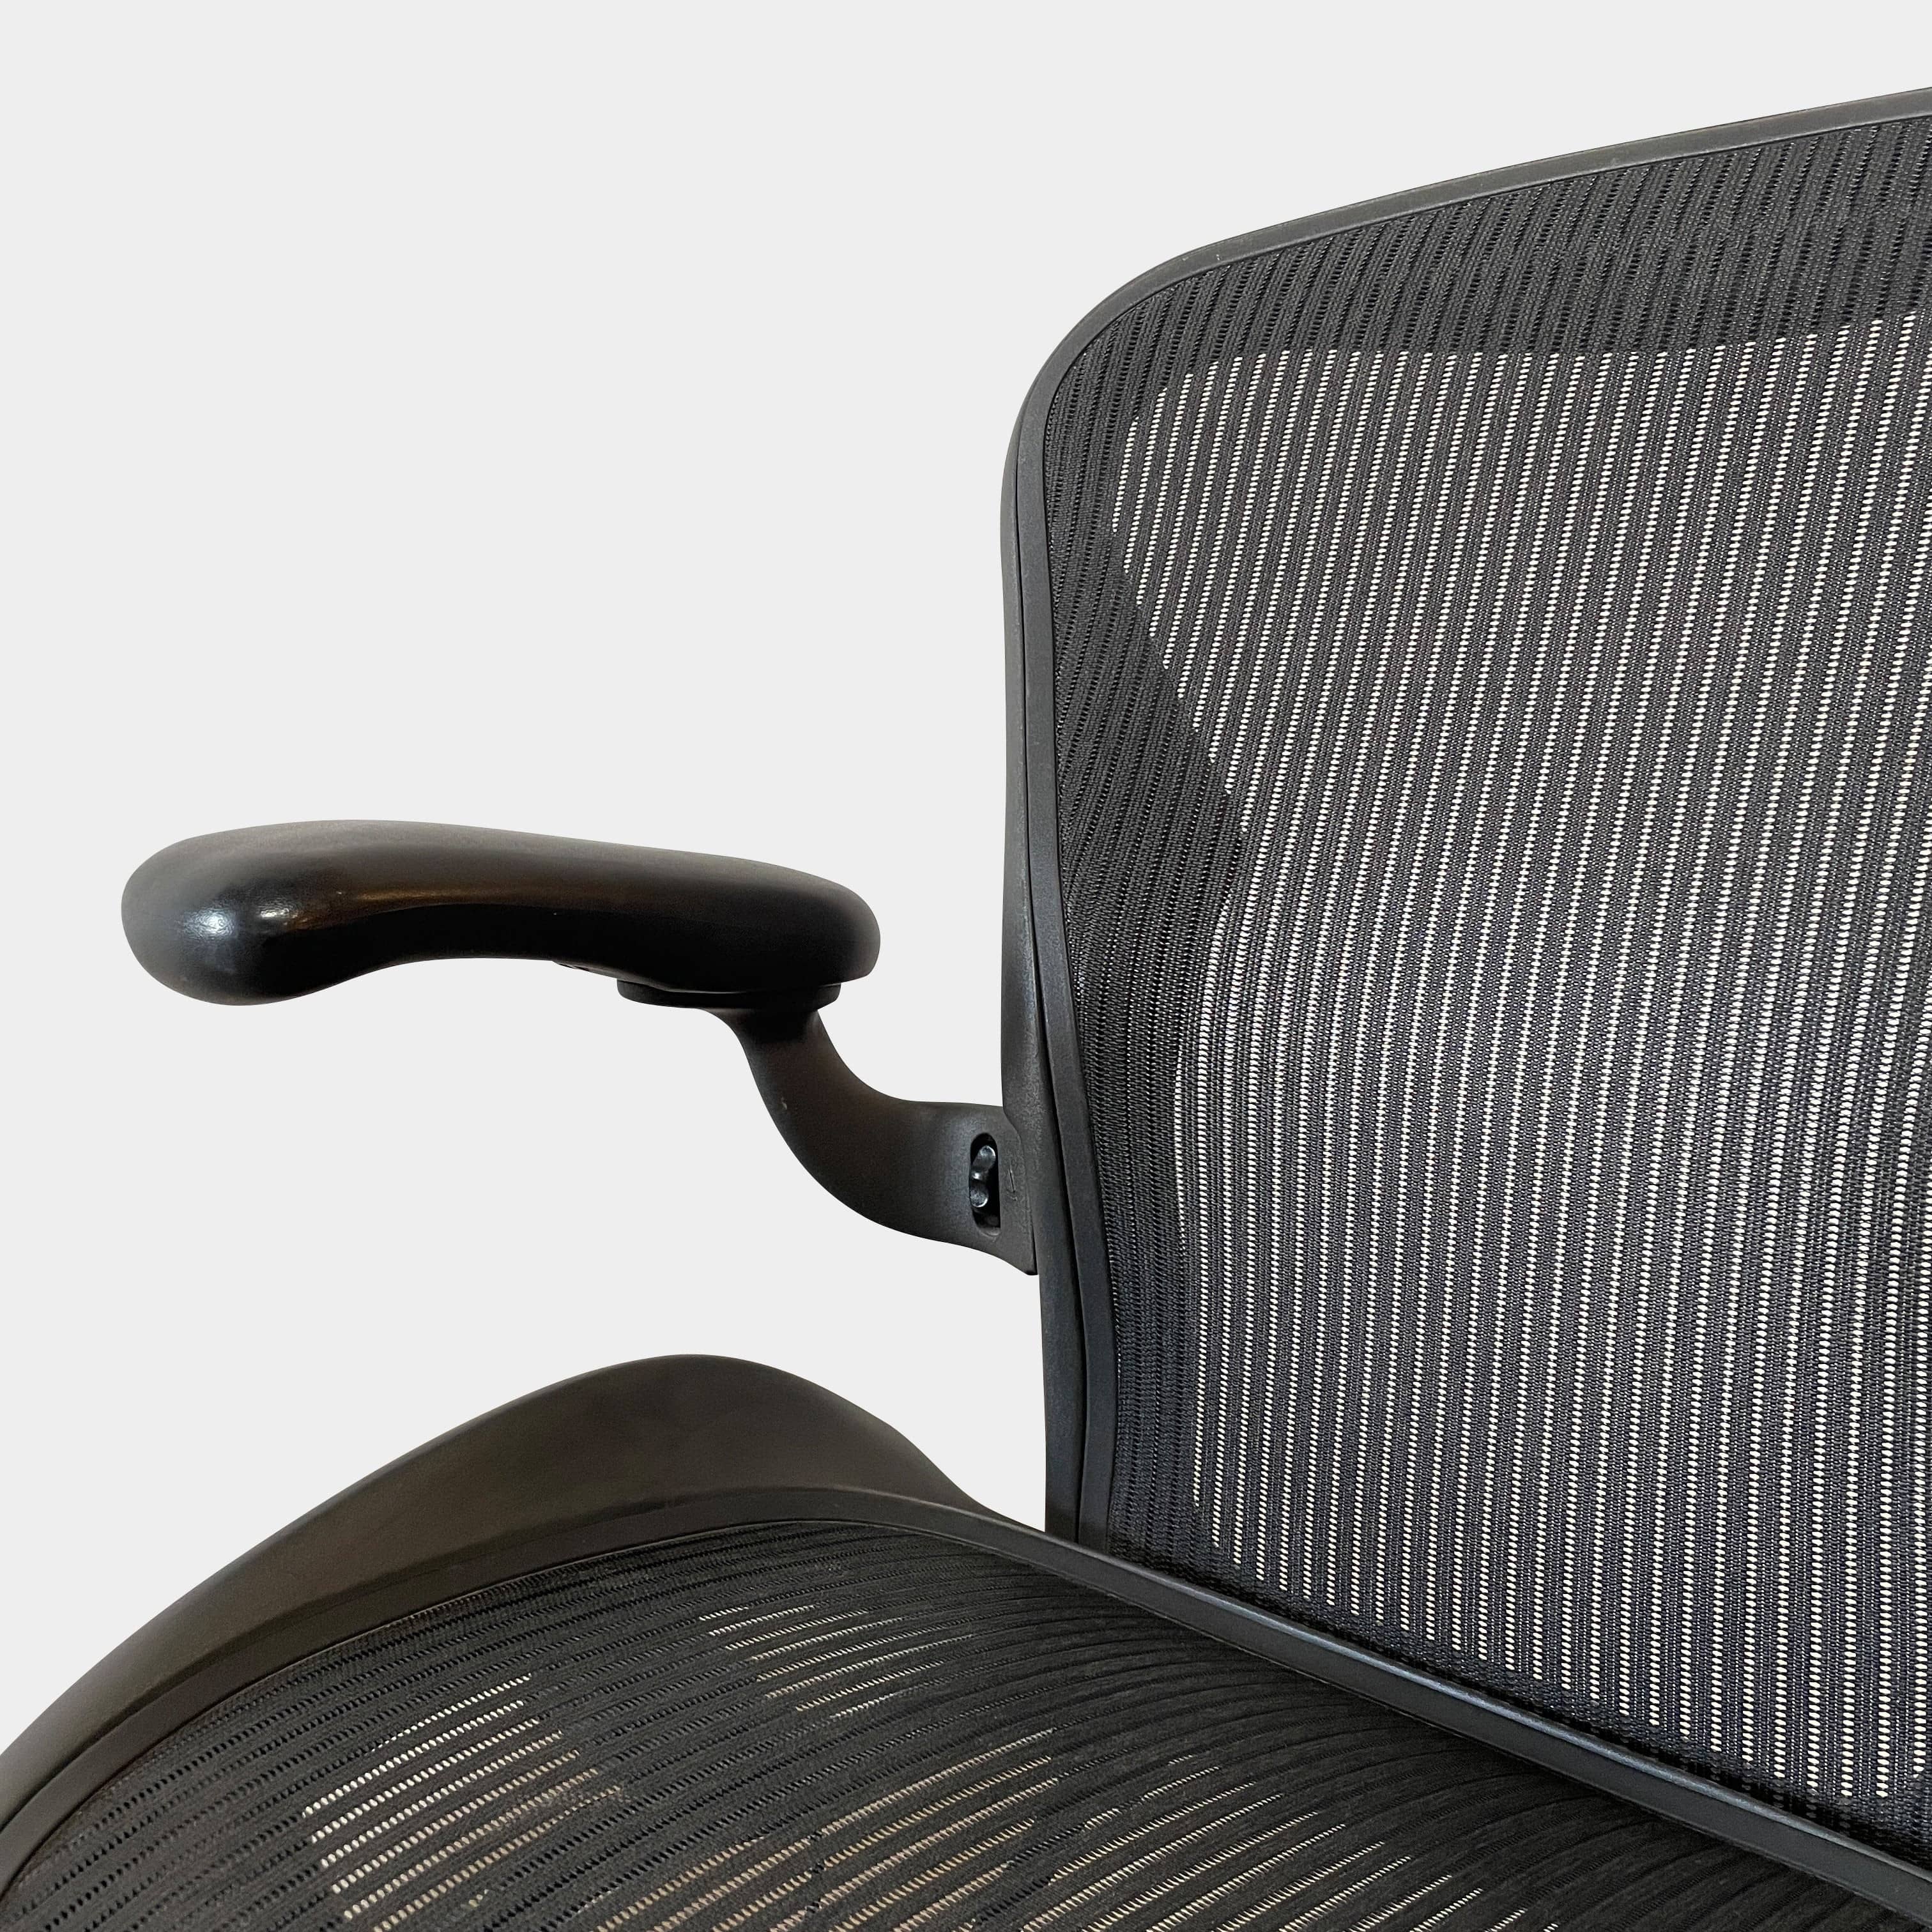 Herman Miller Aeron Mesh Desk Chair Medium Size B fully